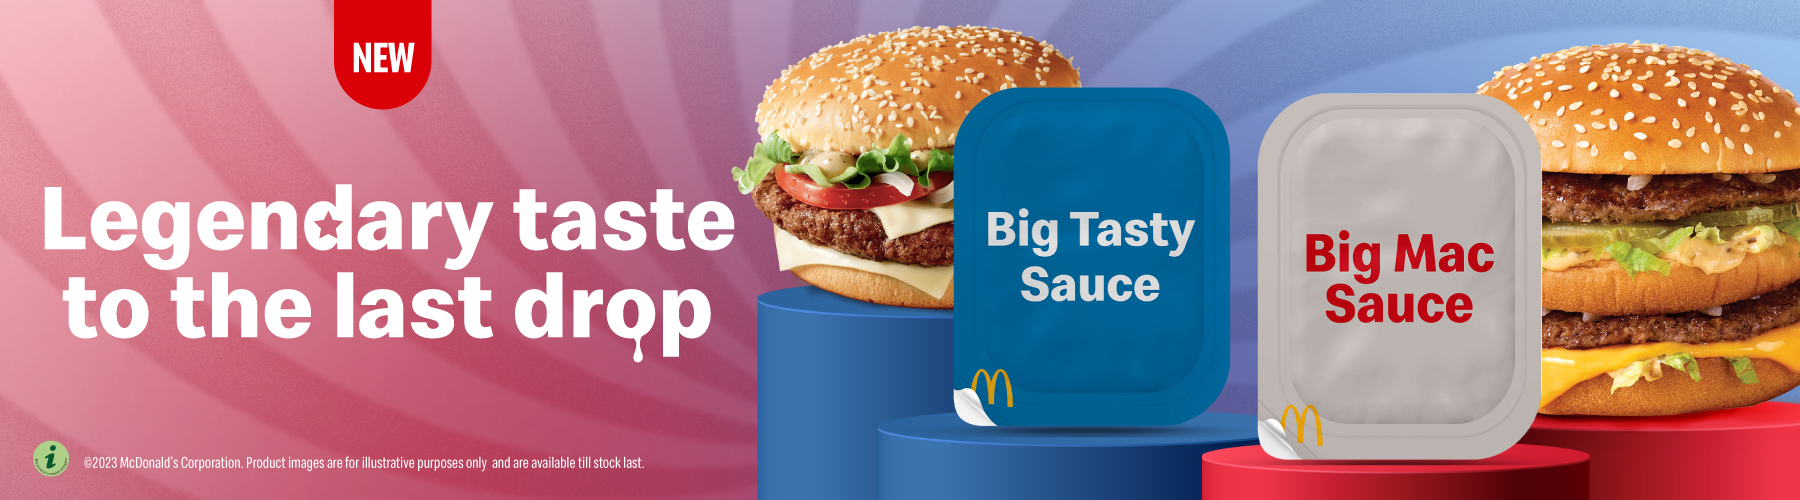 BIG Mac& Big Tasty Sauce